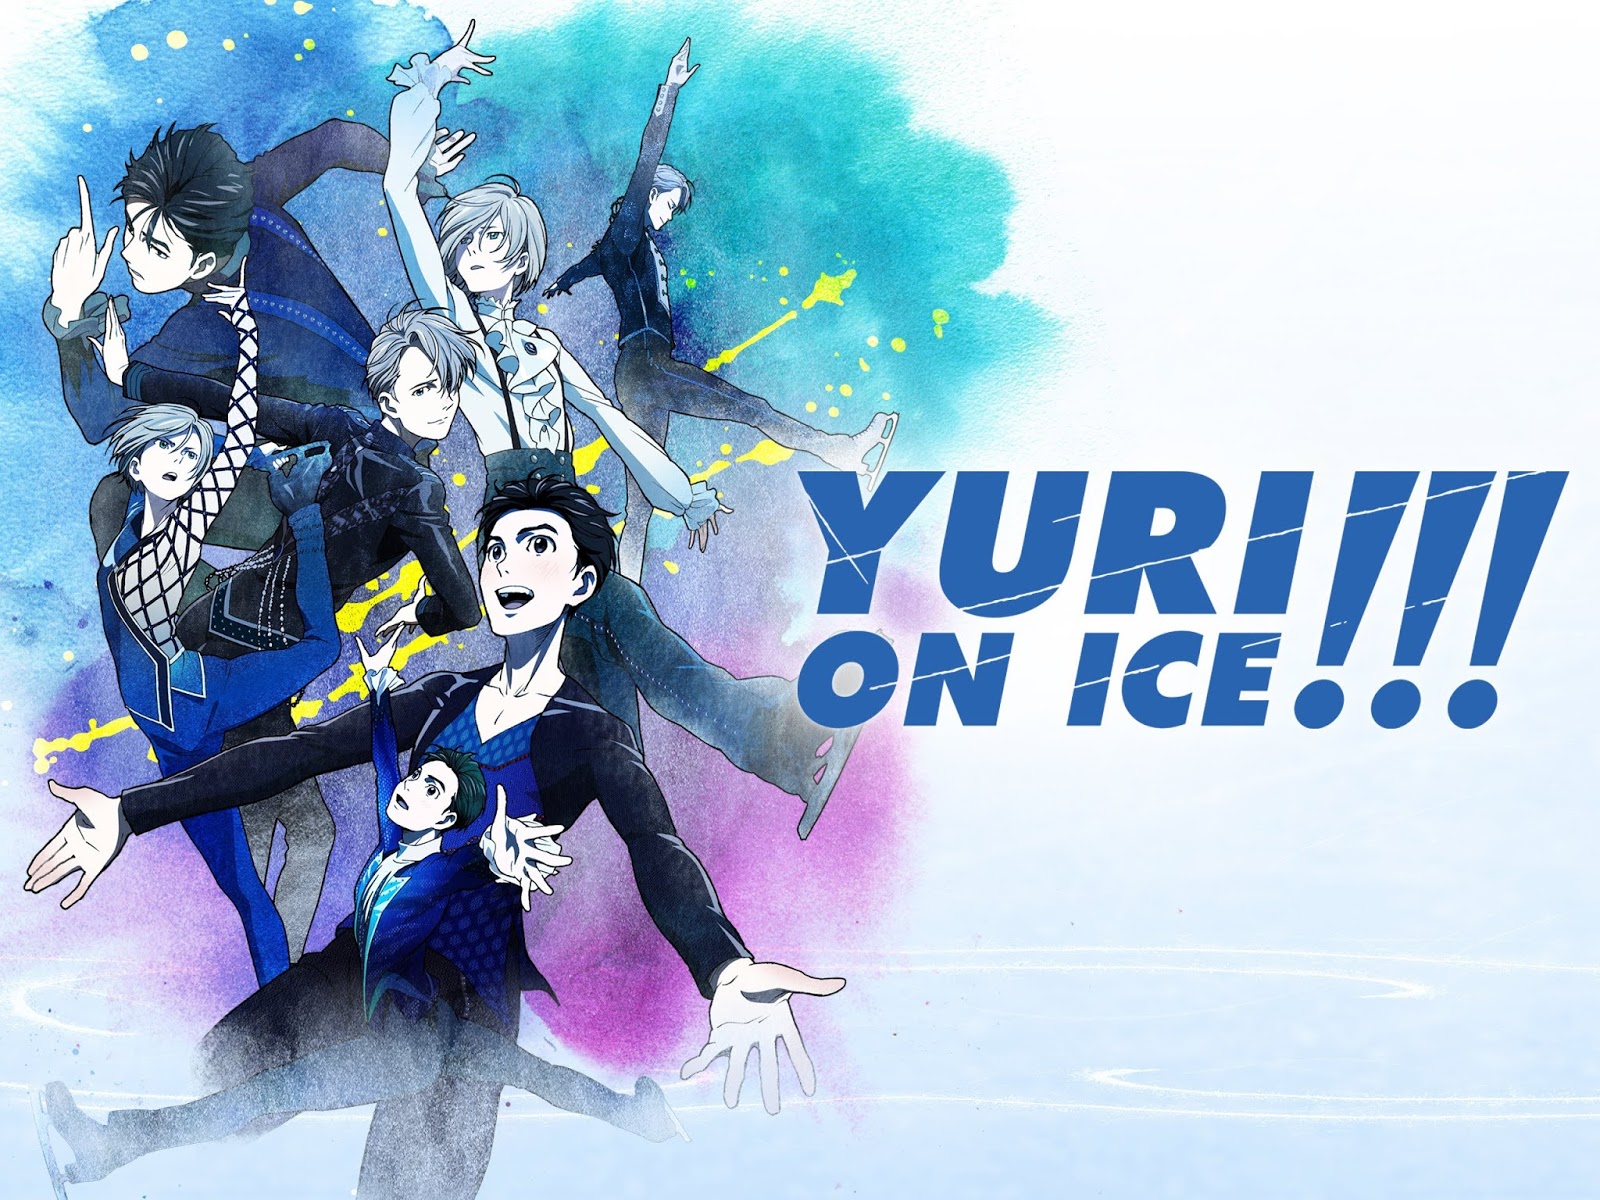 Yuri!!! On Ice Subtitle Indonesia